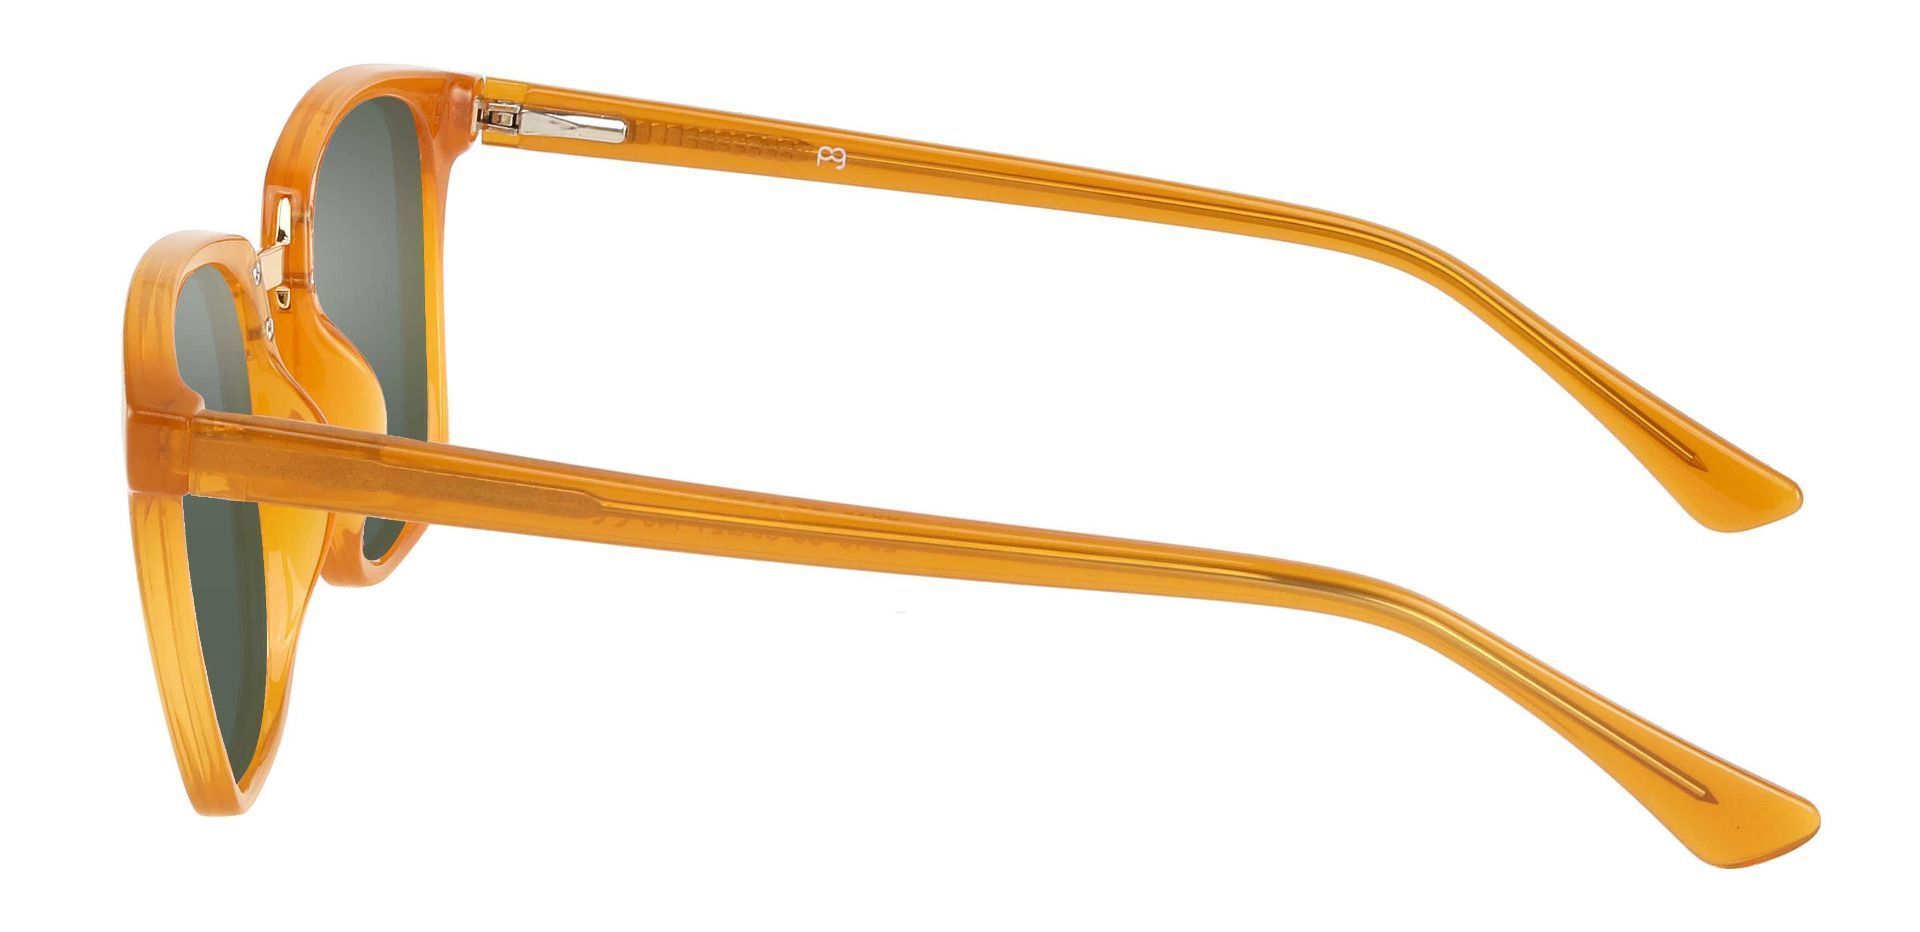 Delta Square Progressive Sunglasses - Orange Frame With Green Lenses